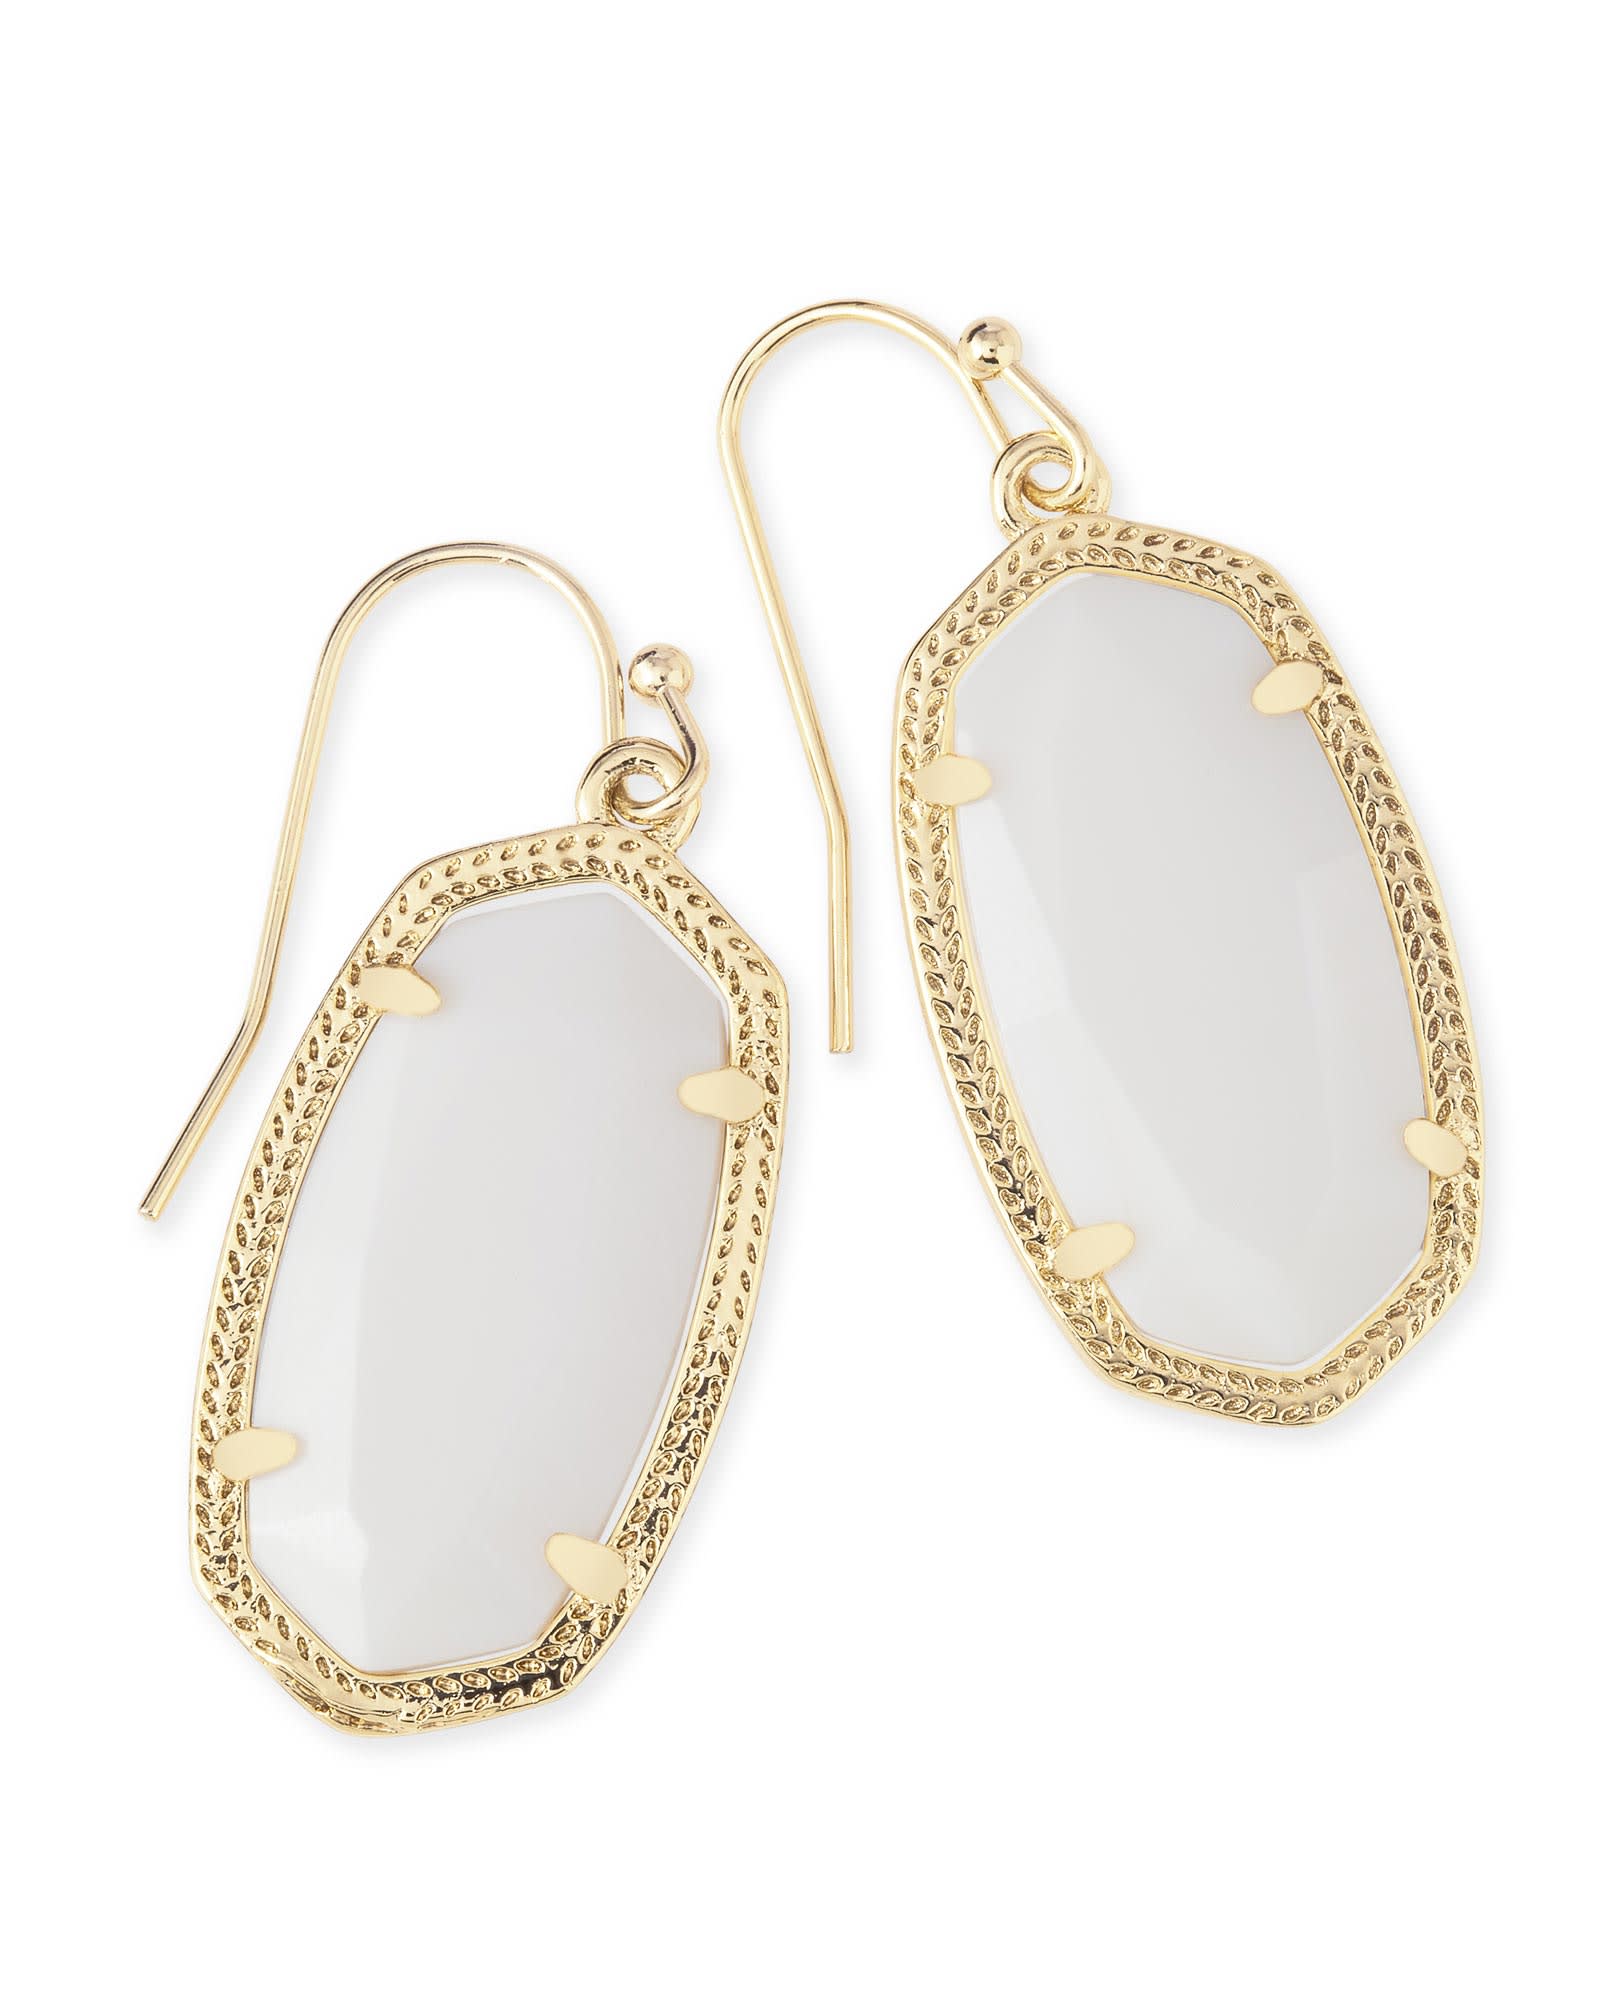 Dani Gold Drop Earrings in White Mother of Pearl